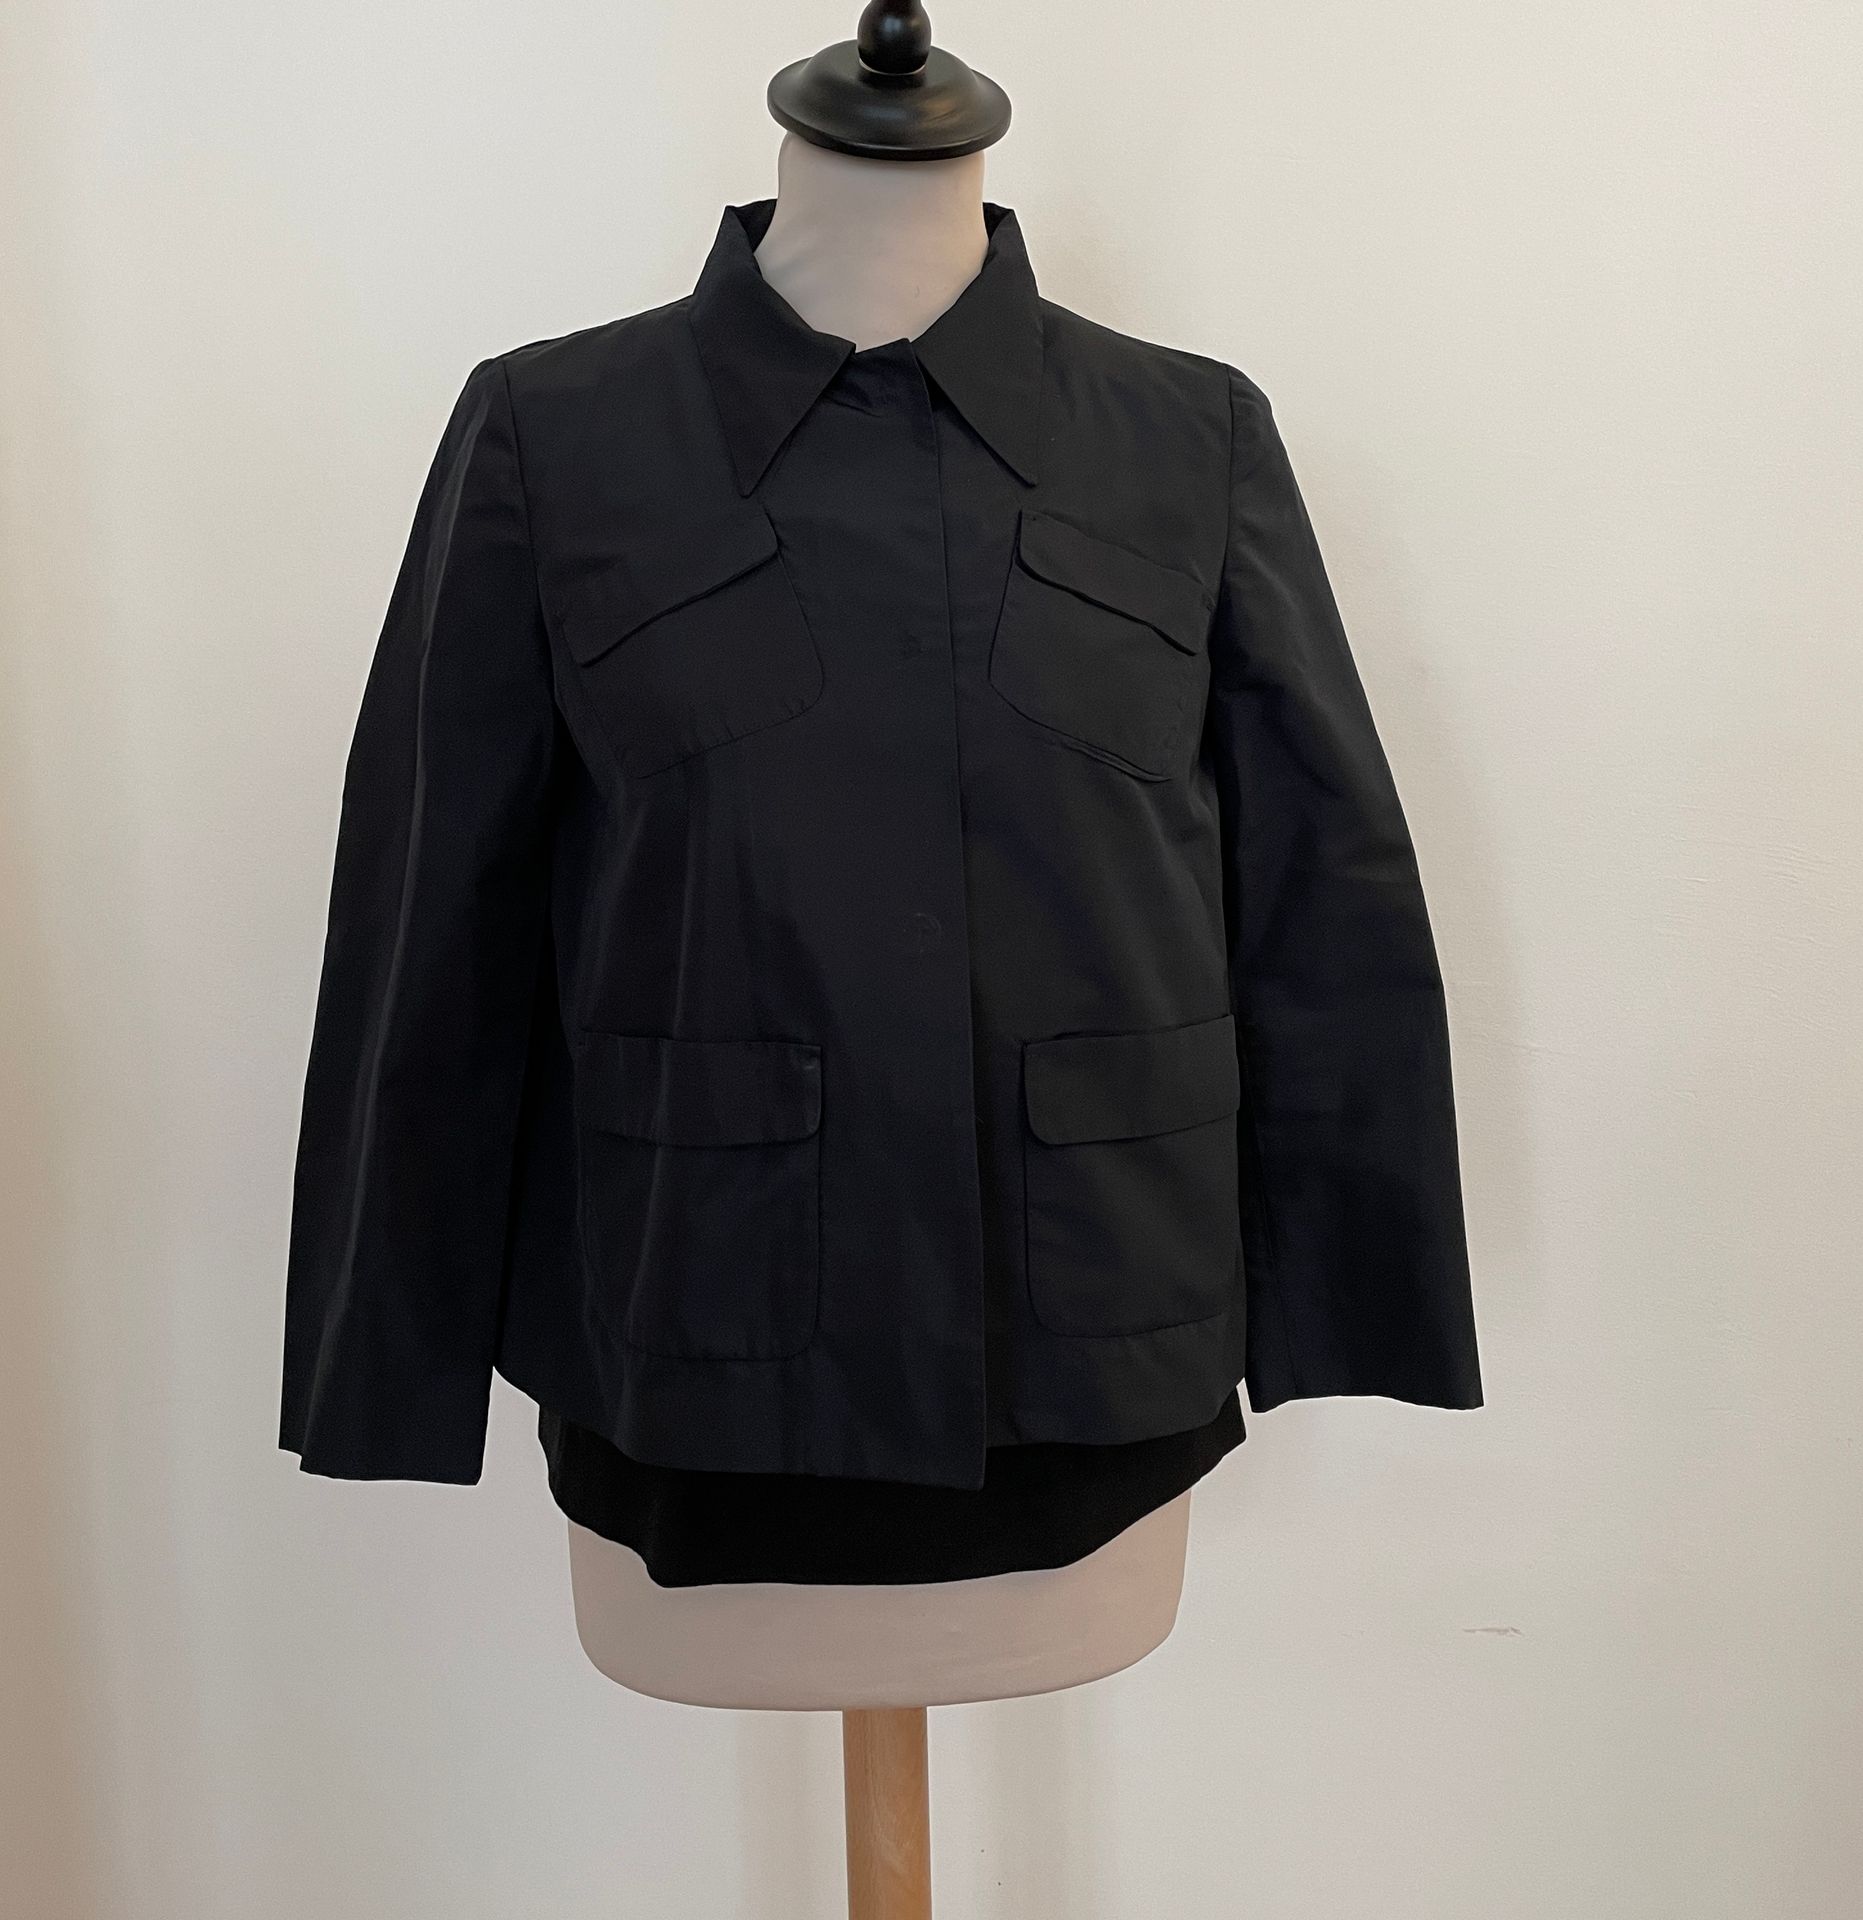 Null MIU MIU

装备包括海军蓝缎面夹克和黑色羊毛荷叶边上衣。

外套；尺寸36

上衣；尺寸为38